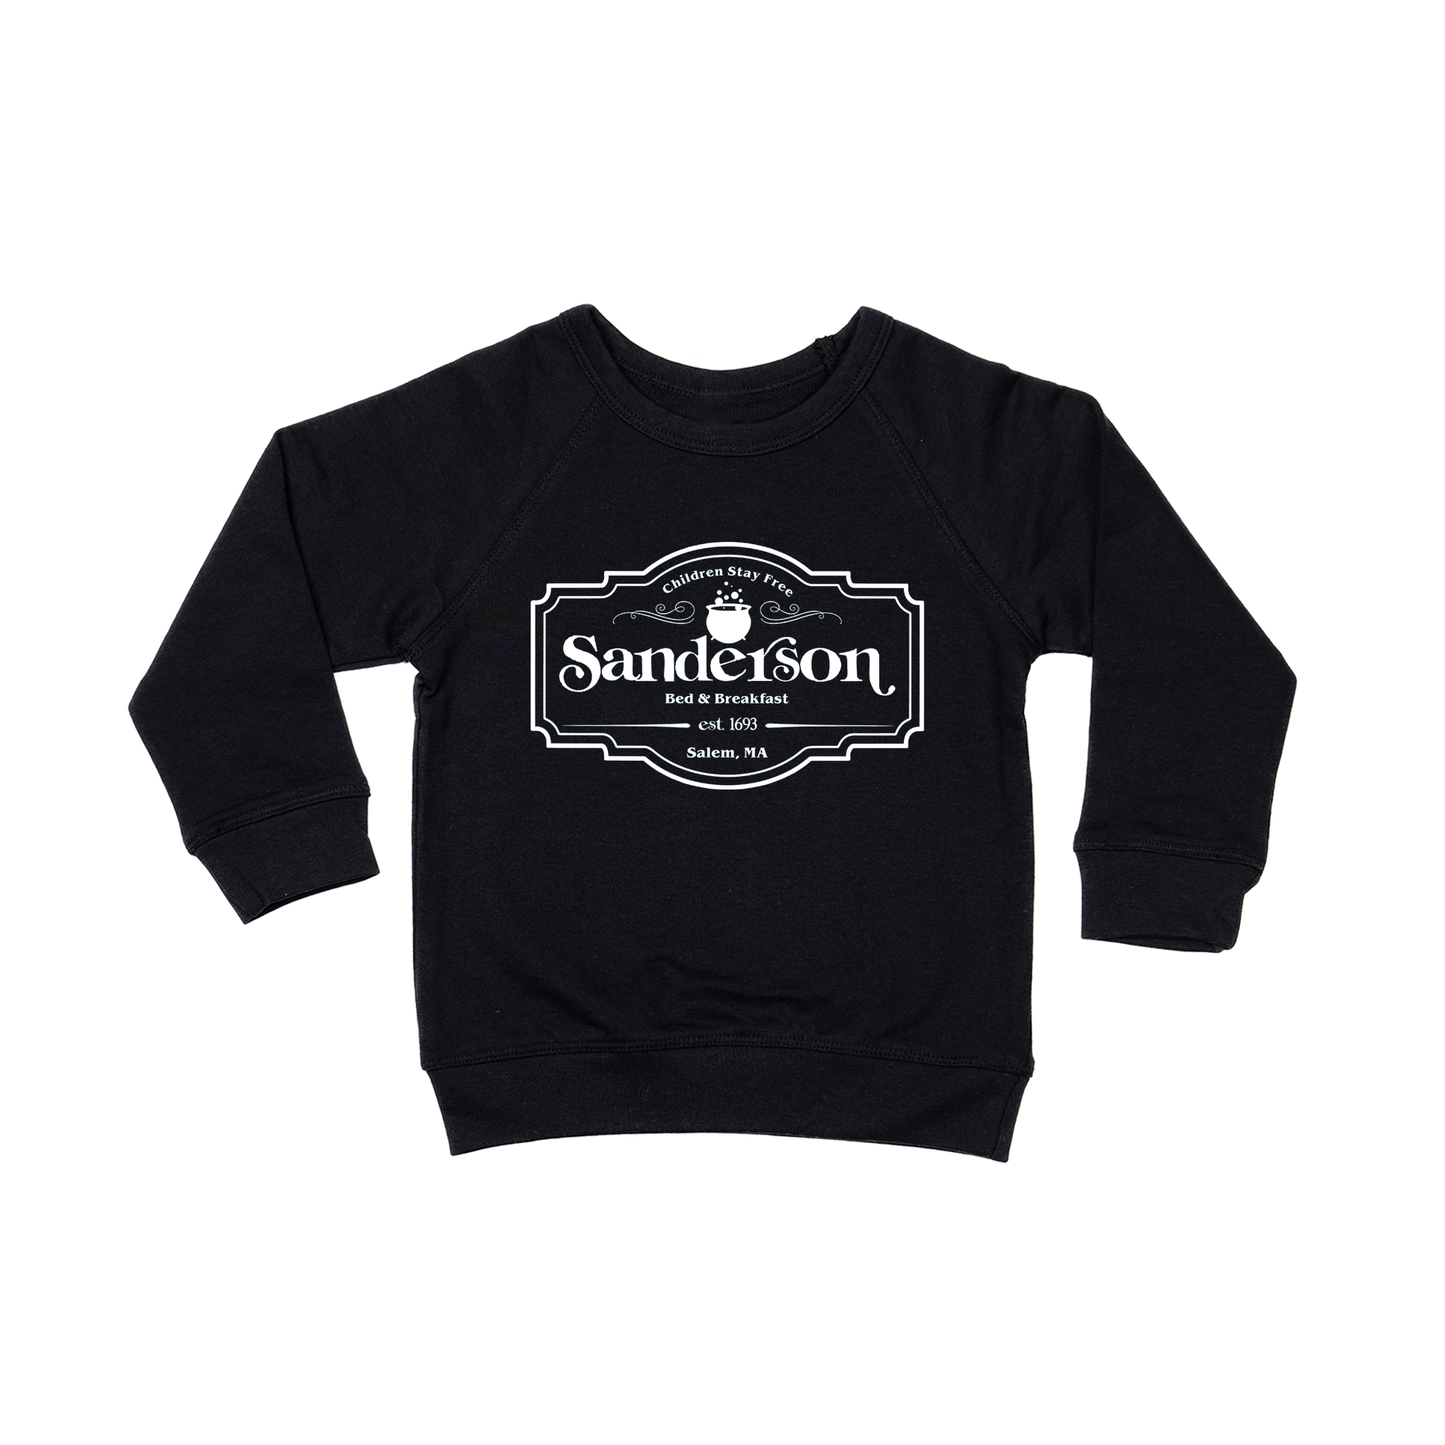 Sanderson Bed + Breakfast (White) - Kids Sweatshirt (Black)